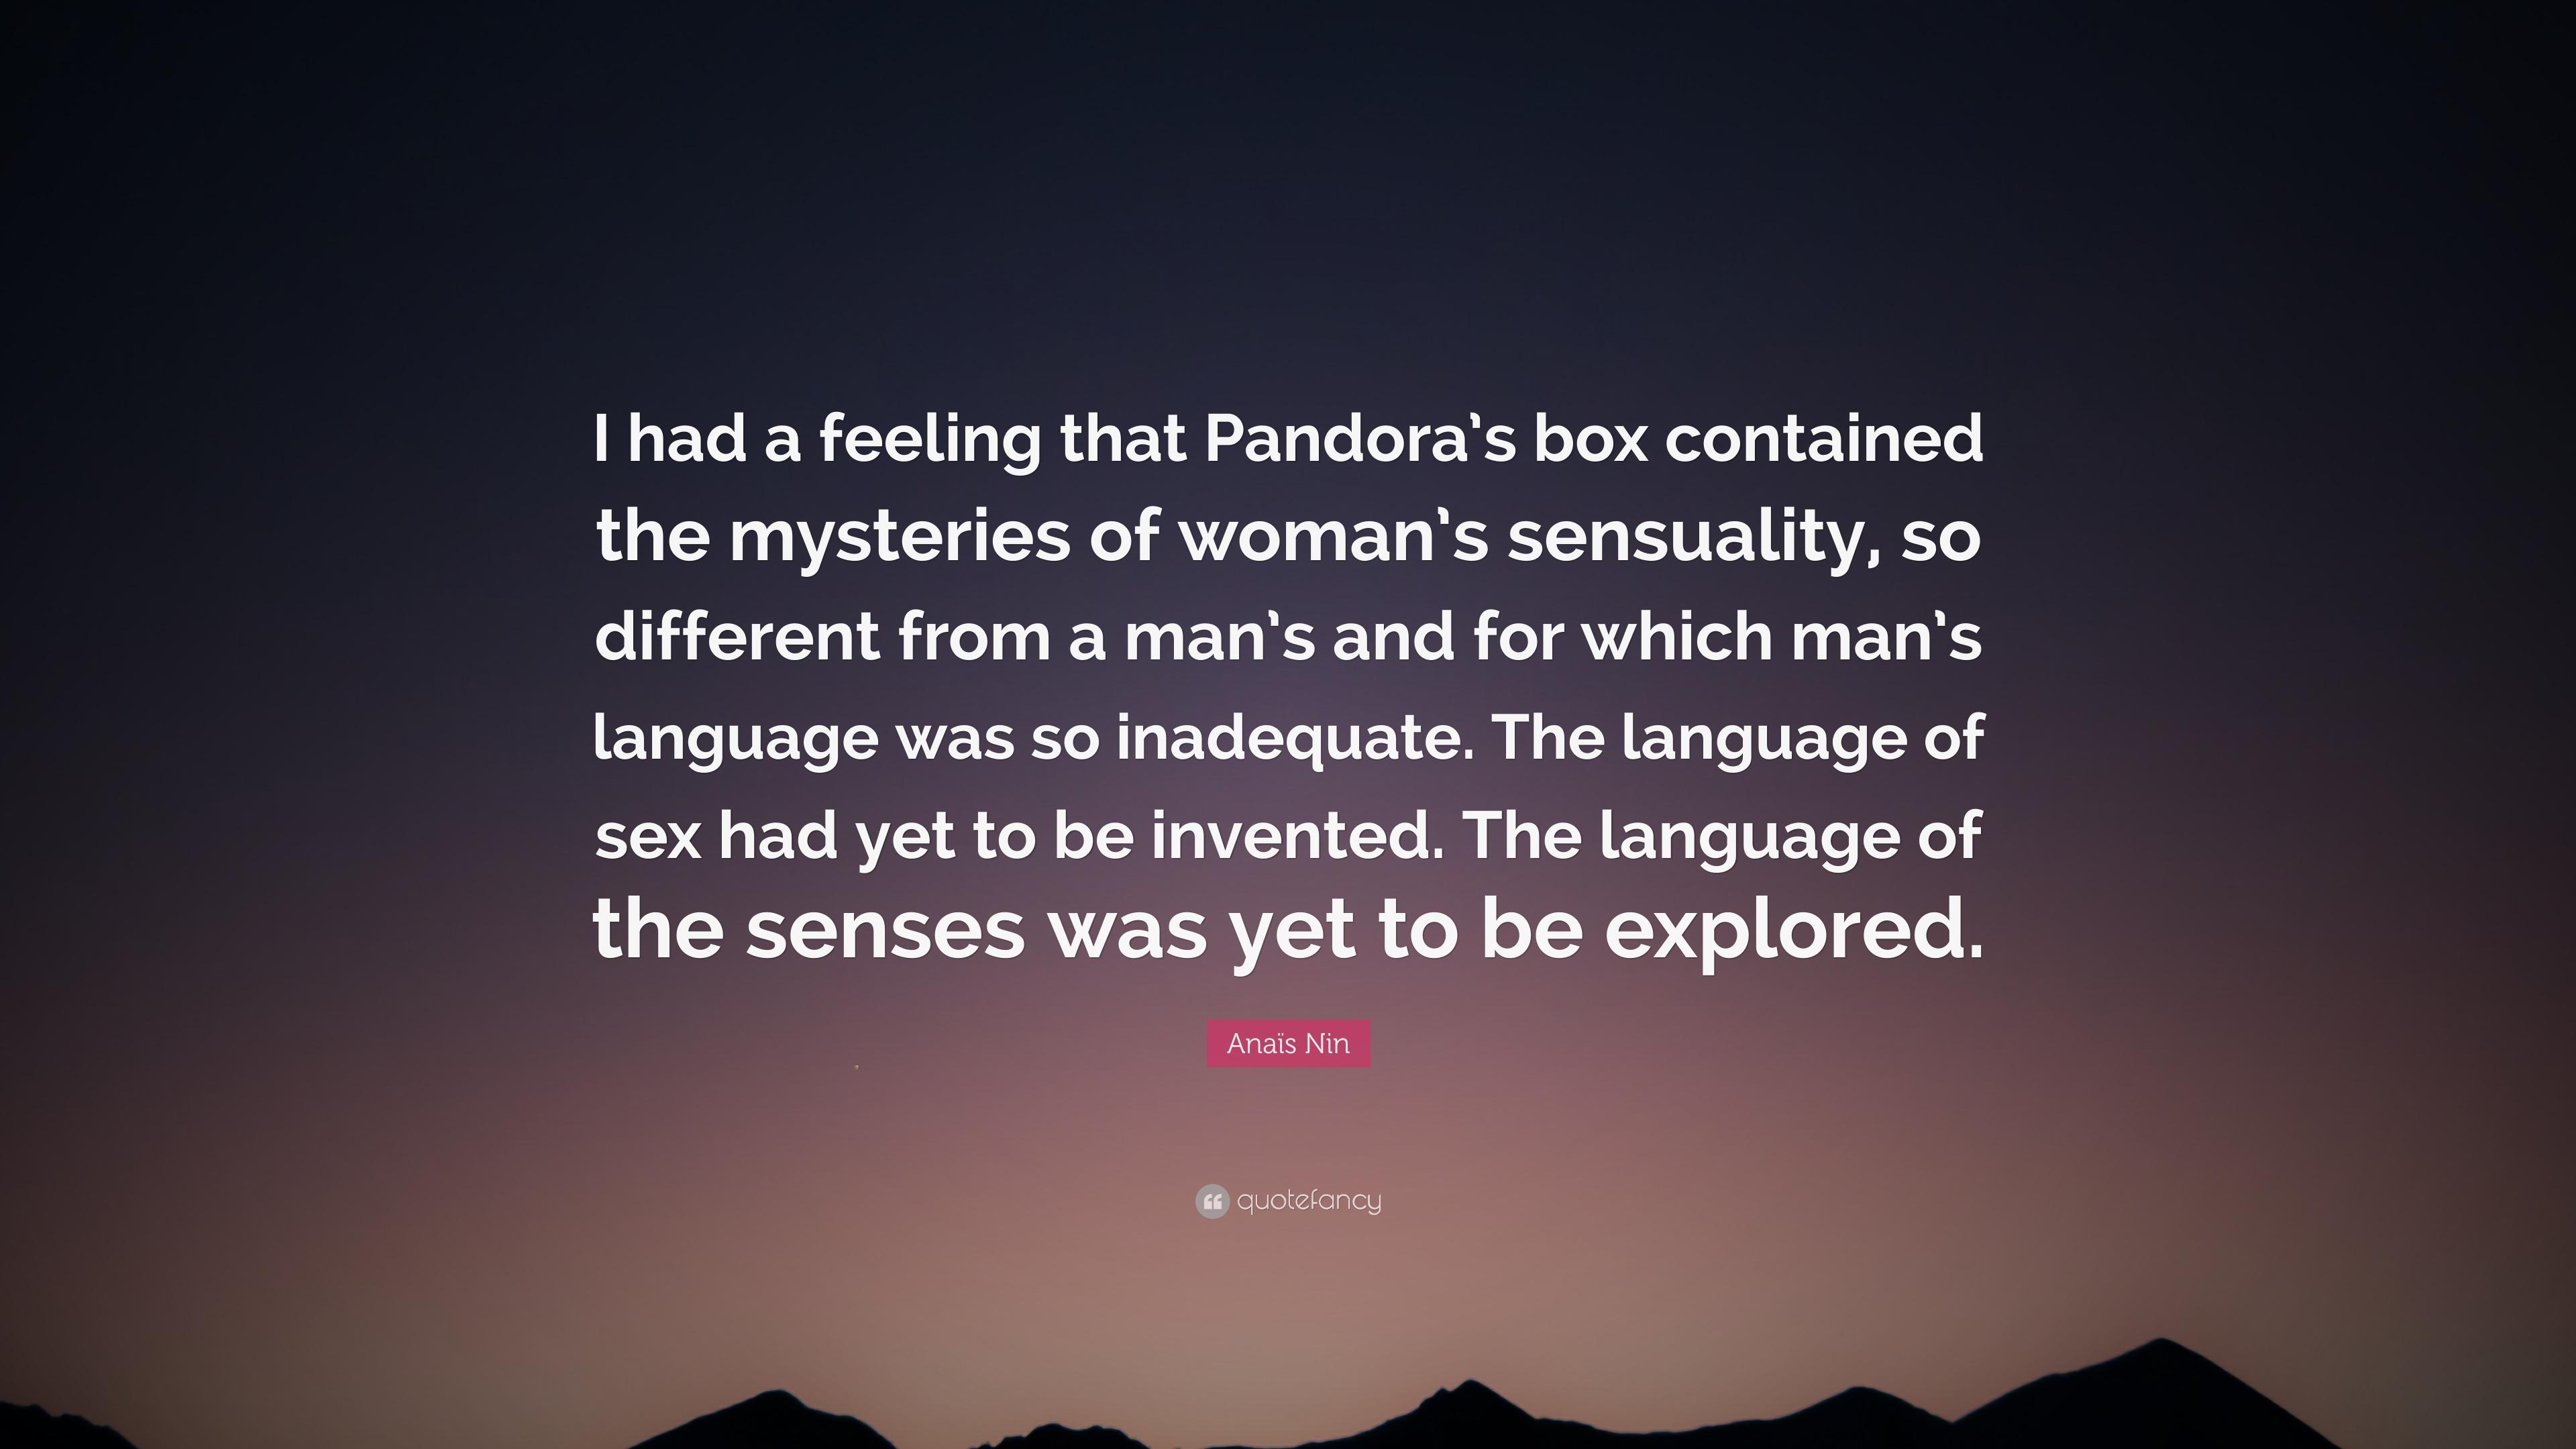 Anaïs Nin Quote: “I had a feeling that Pandora's box